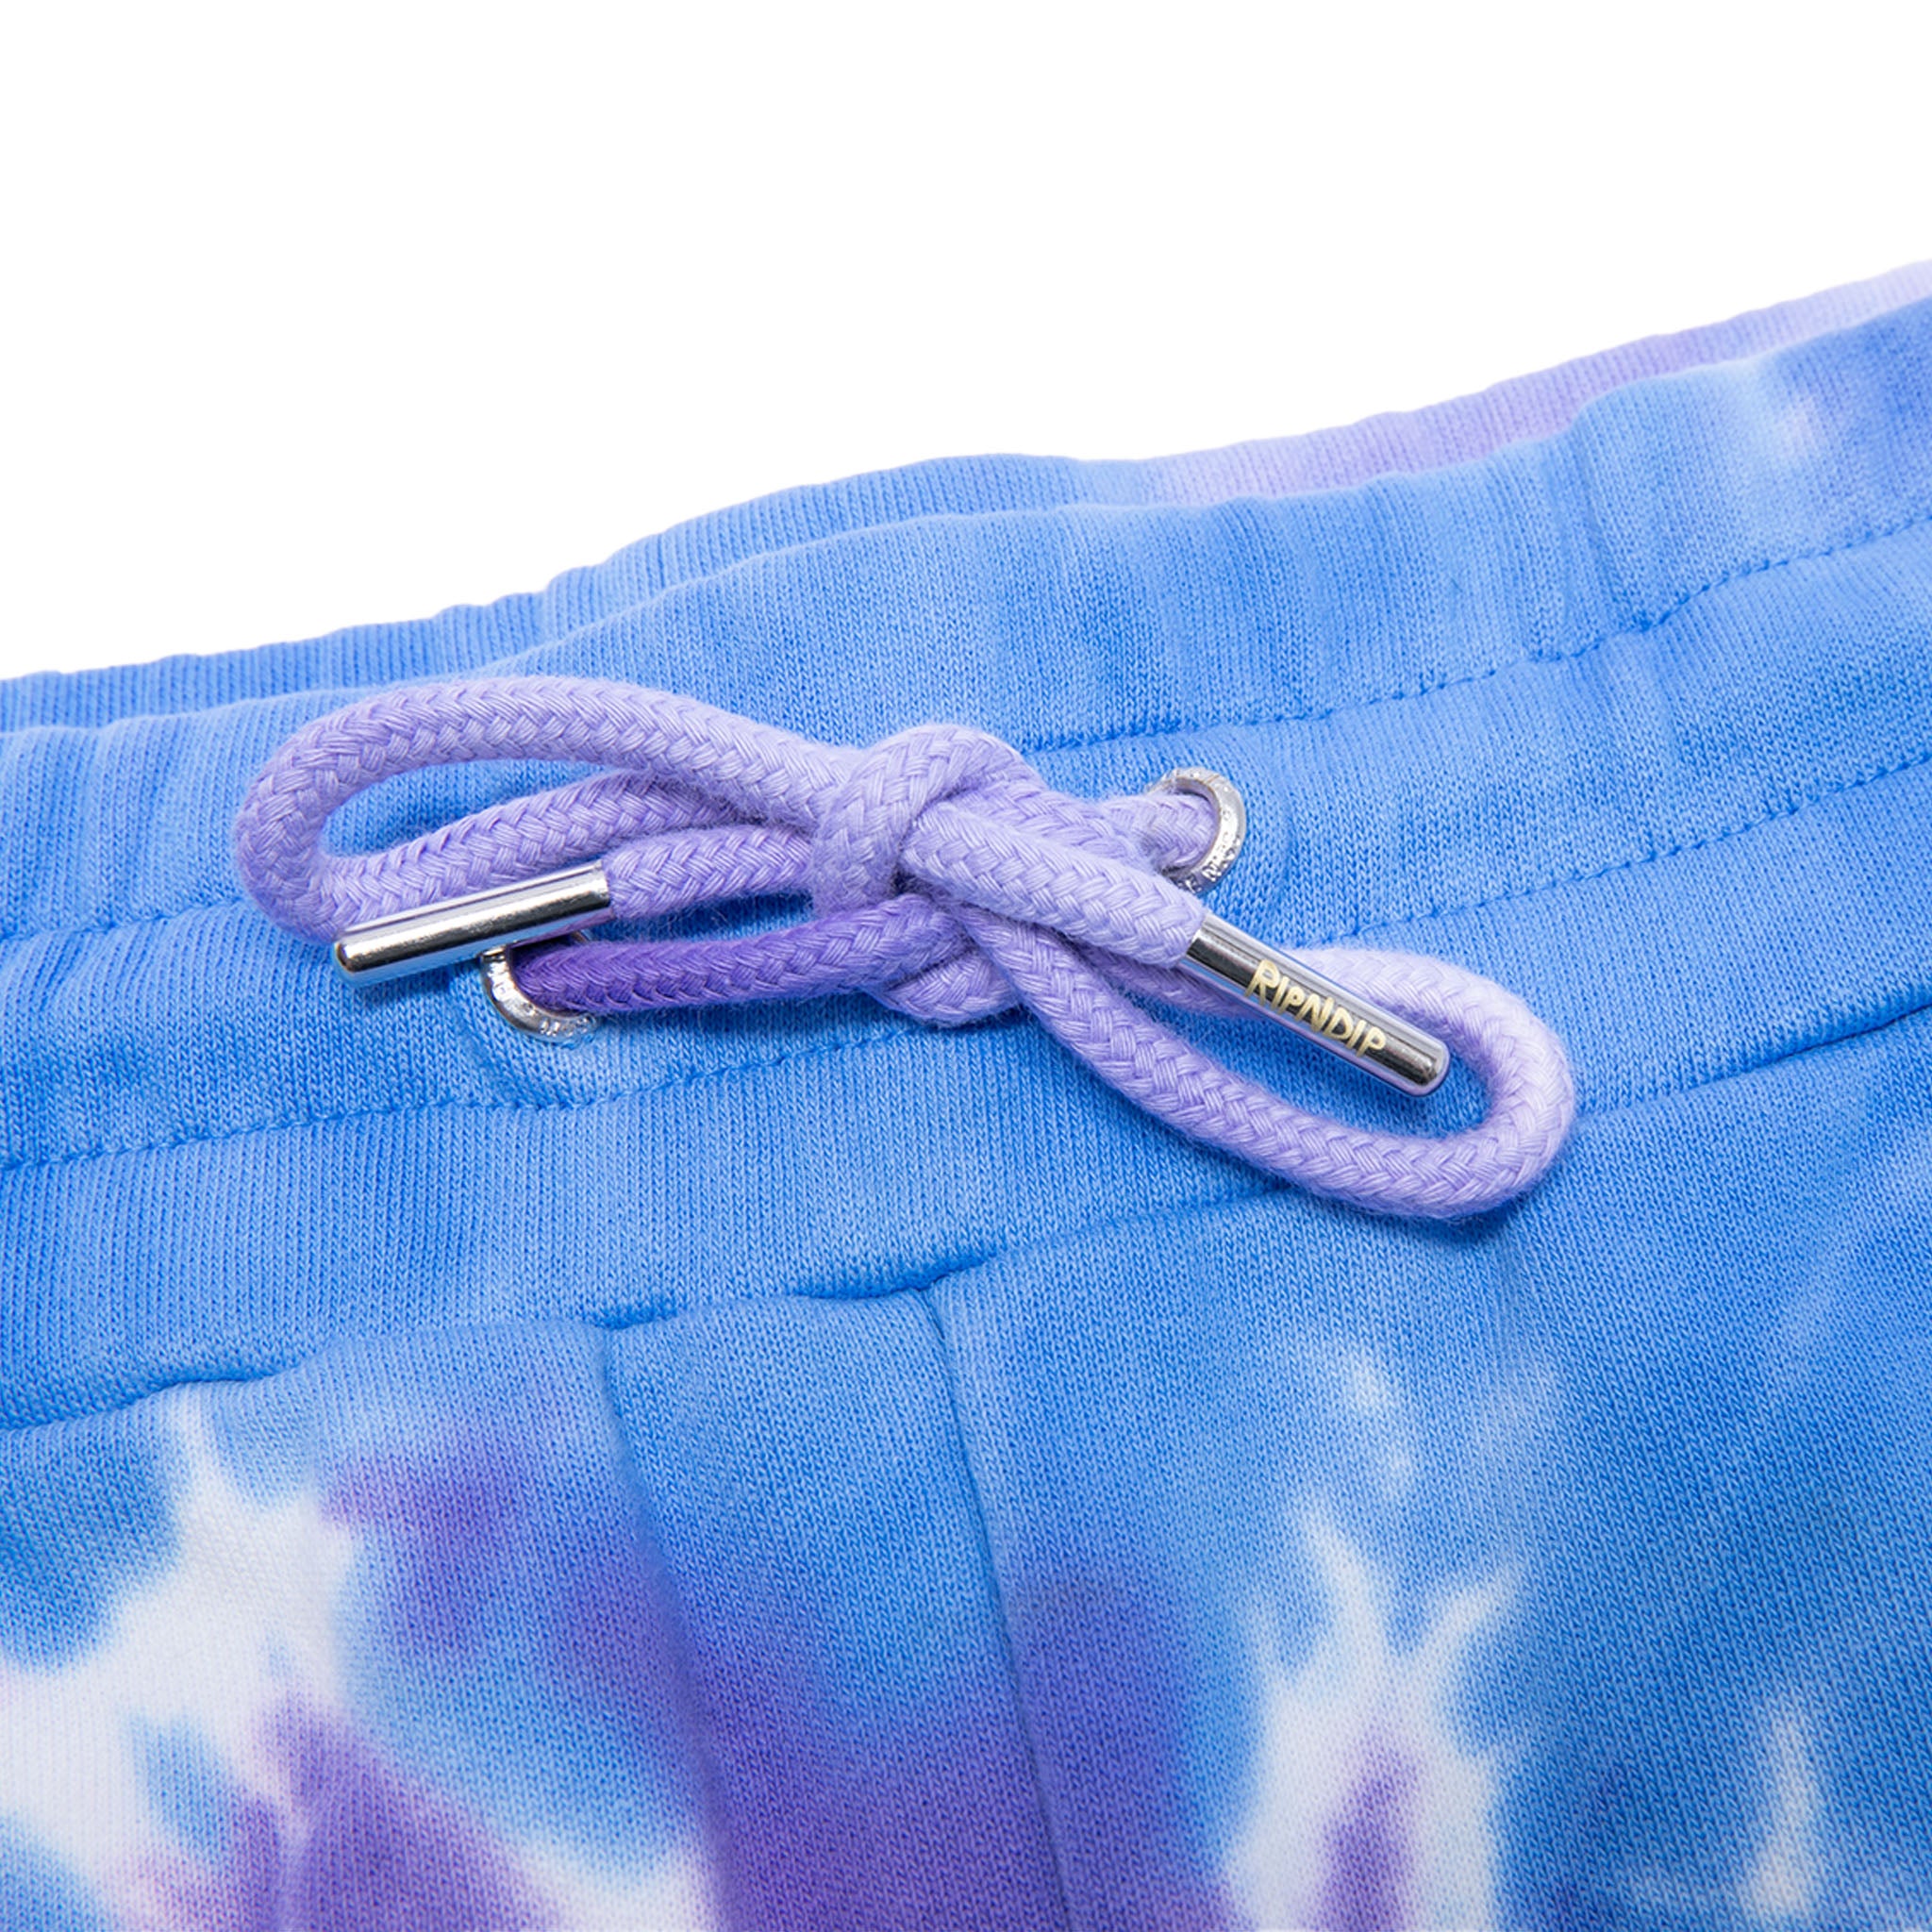 Friday Jr Sweatshorts (Purple/Lilac Spiral Dye)